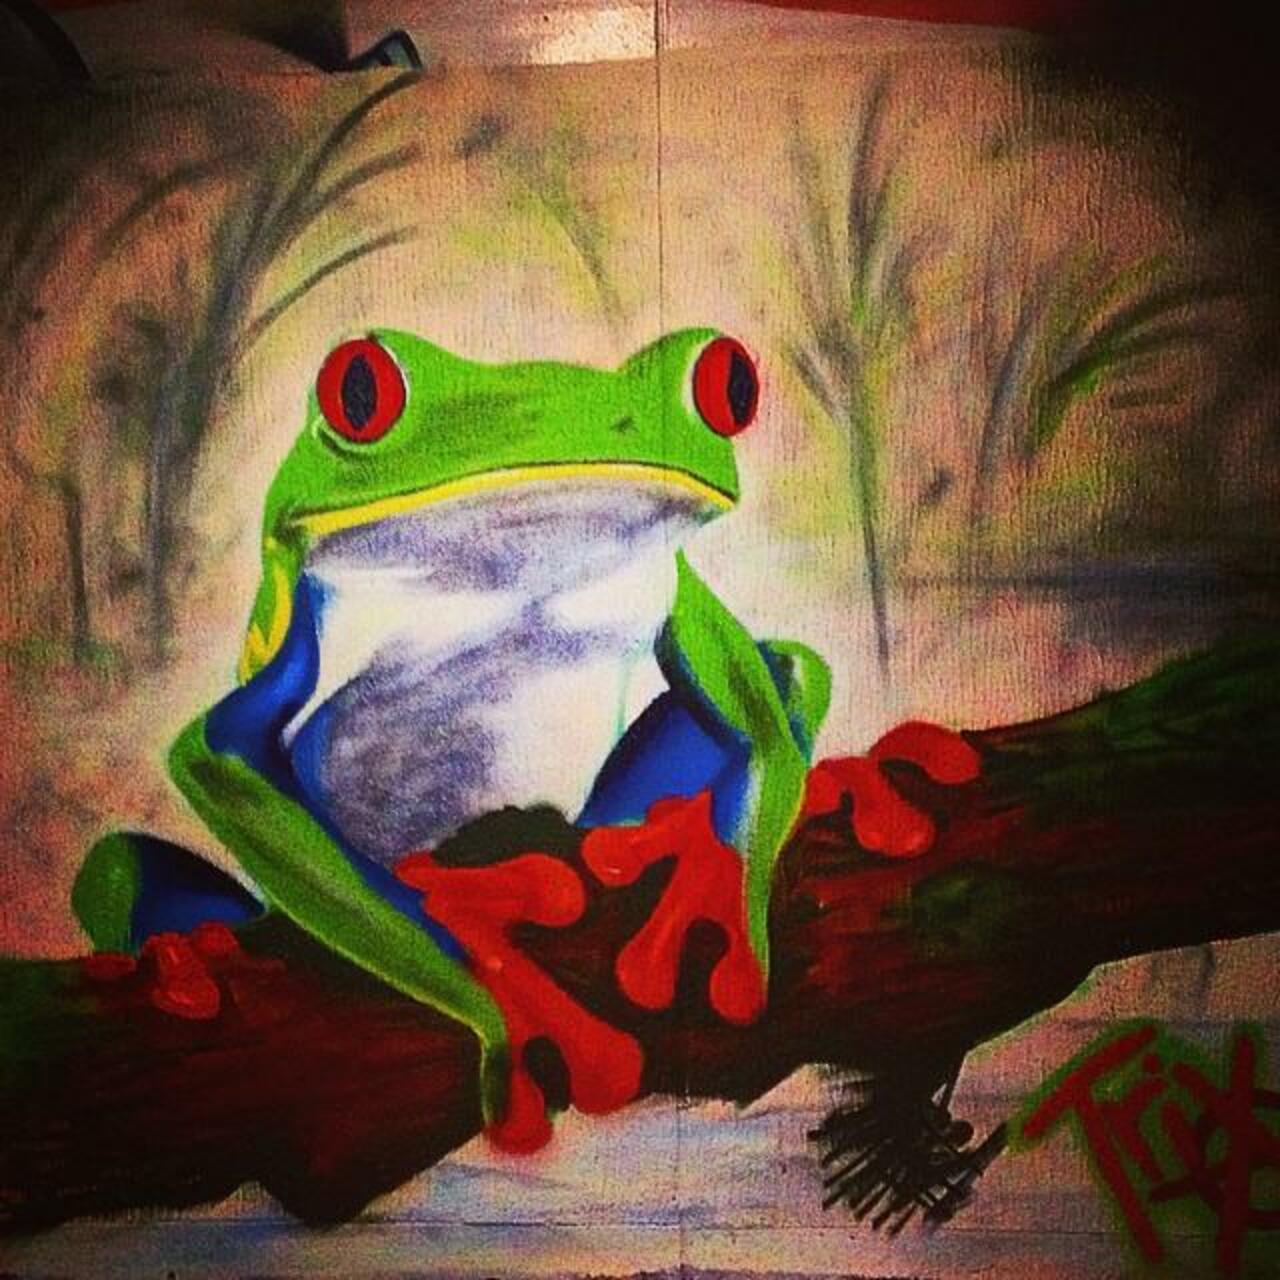 cute rainforest frog found in #Gloucester by artist Trix @rtglos #streetart #graffiti #photography http://t.co/MLSKZmKUql